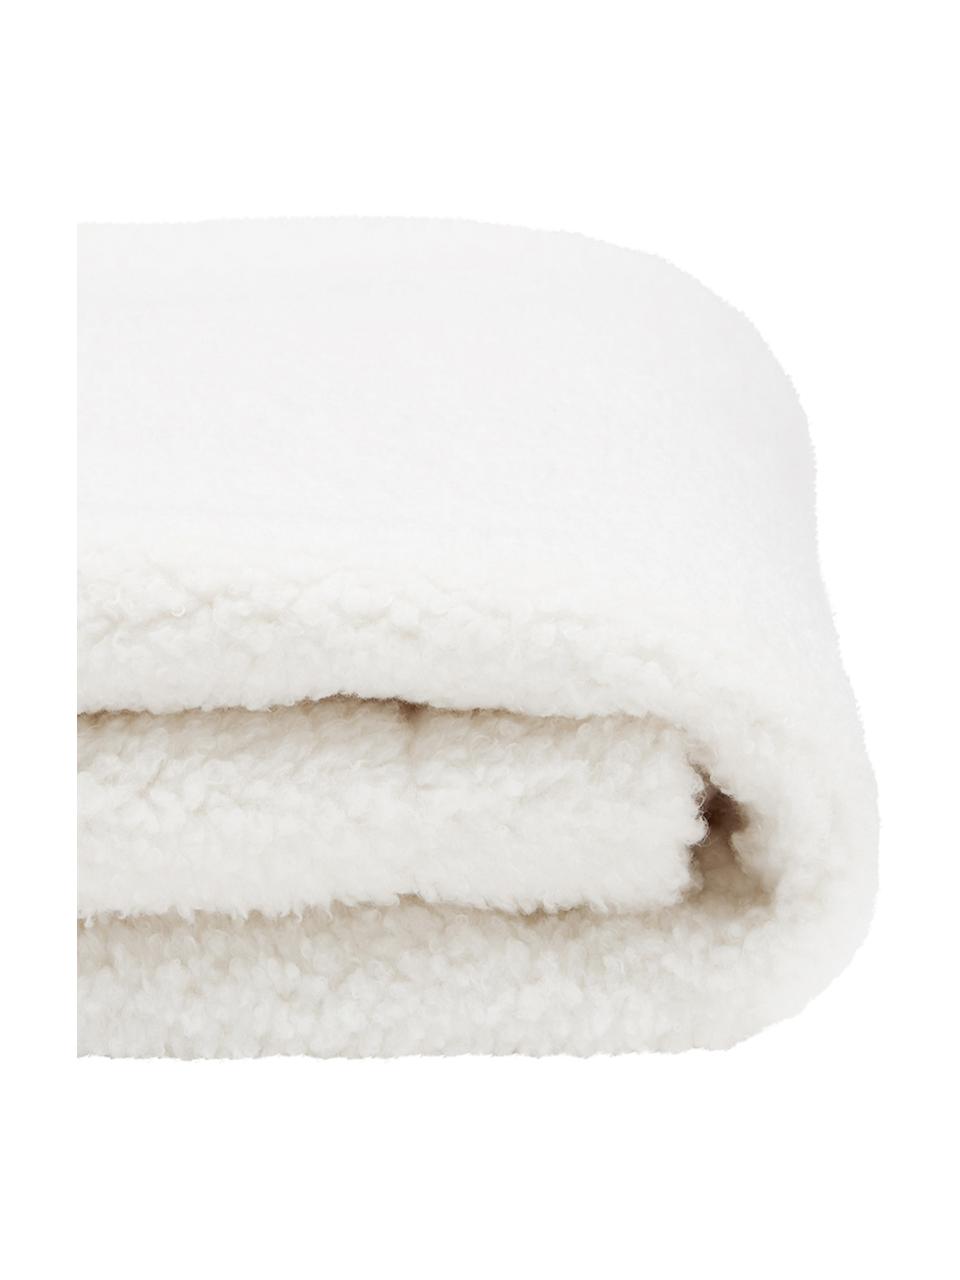 Teddy plaid Mille in wit, Bovenzijde: 100% polyester (teddyvach, Onderzijde: 100% polyester, Wit, 150 x 200 cm